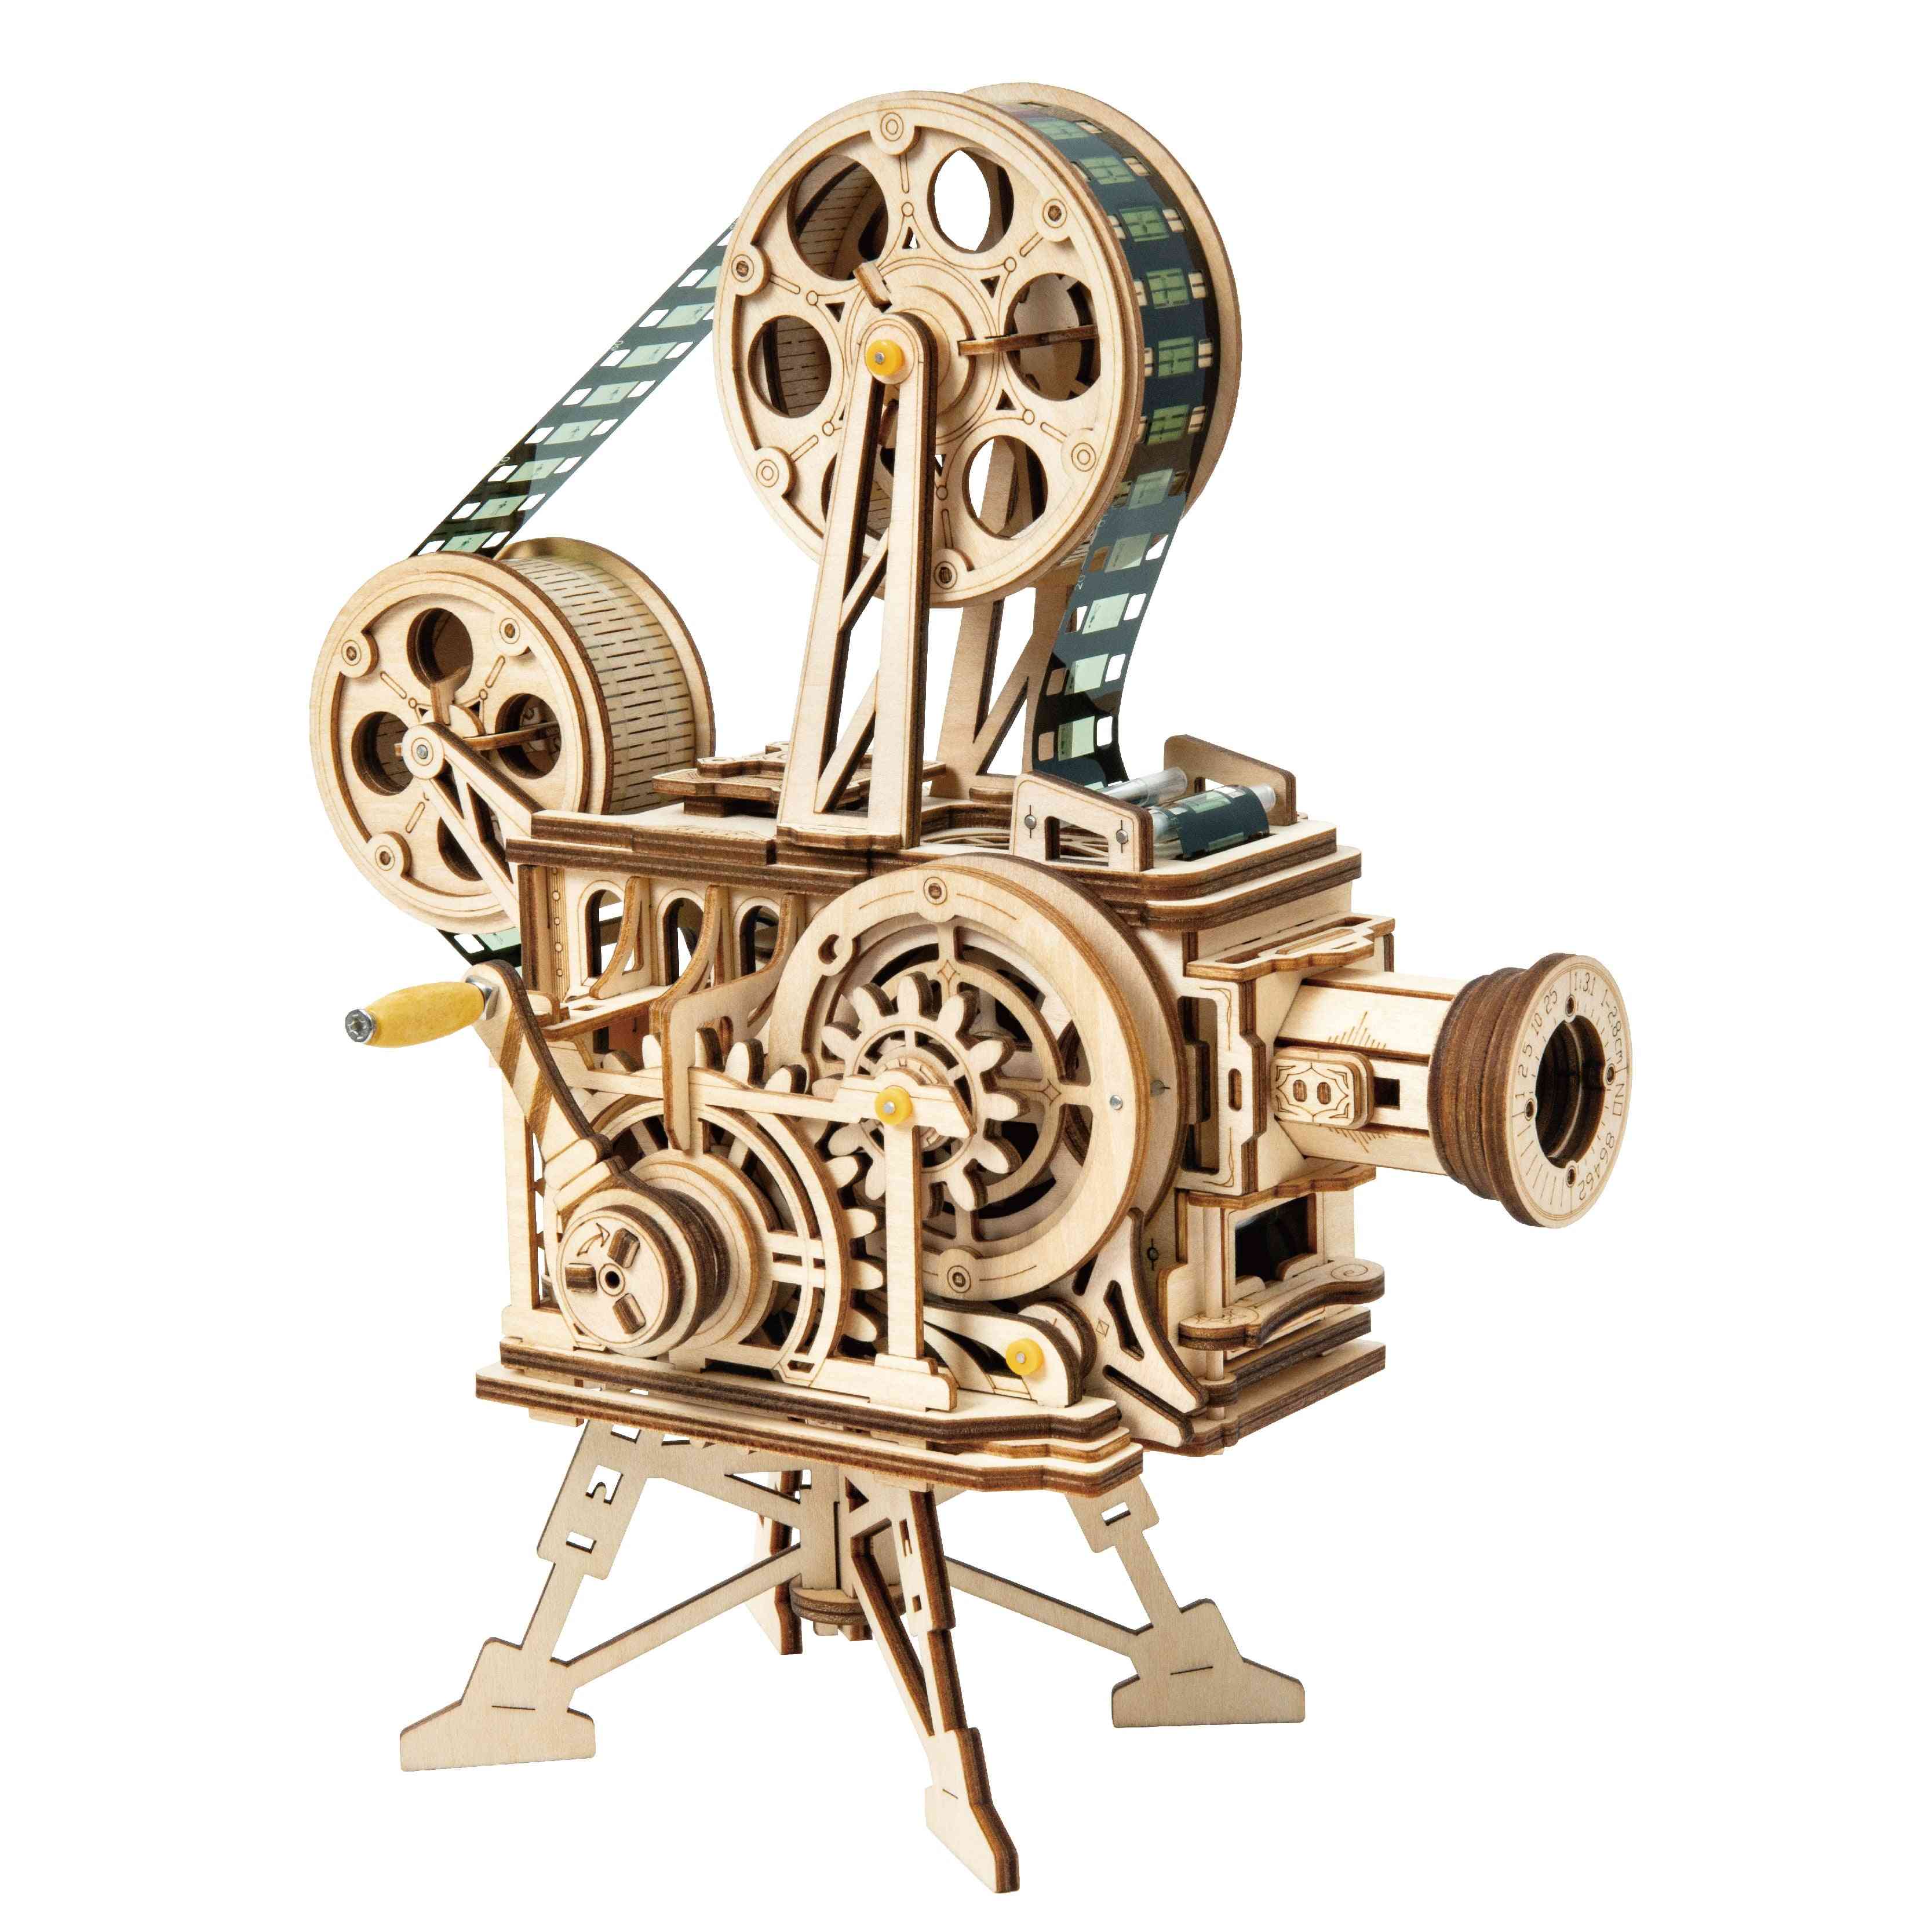 Kits de construcción de modelos de rompecabezas mecánicos de madera 3d acción de corte por láser por un reloj juguetes de regalo para niños